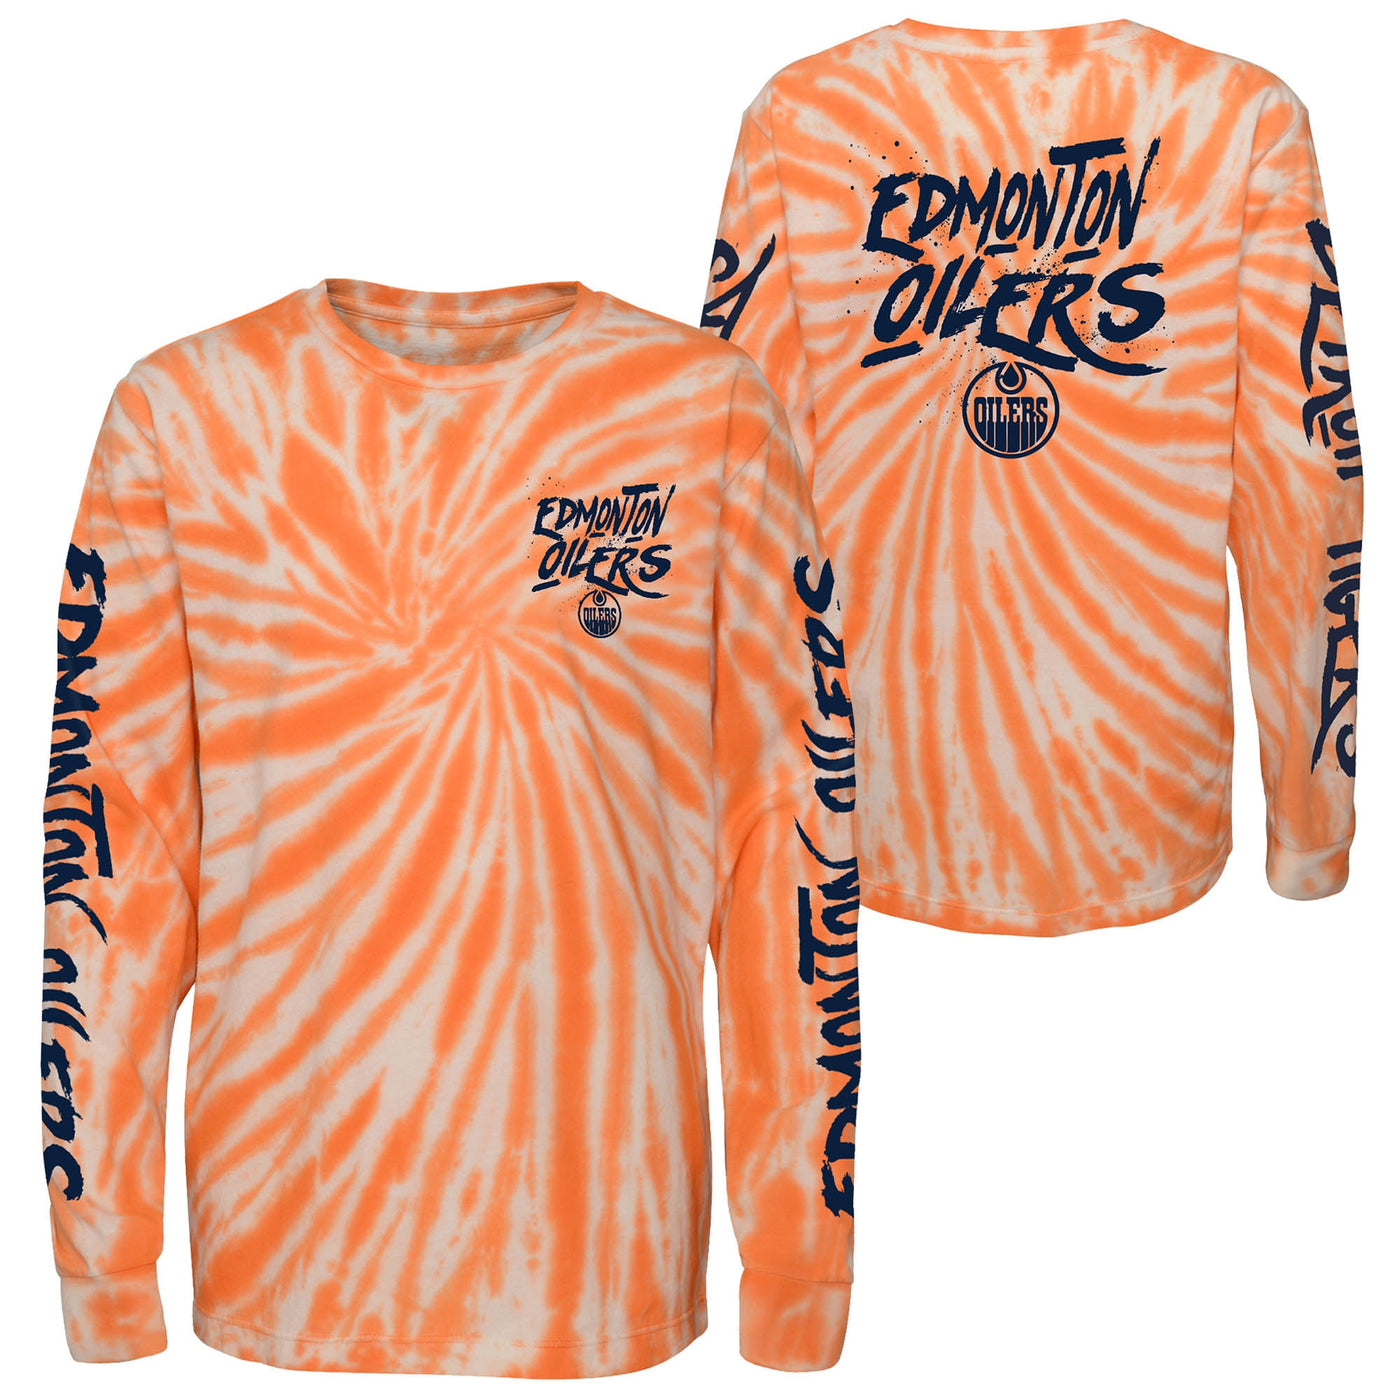 Edmonton Oilers Youth Outerstuff Huntington Orange Tie Dye Long Sleeve Shirt